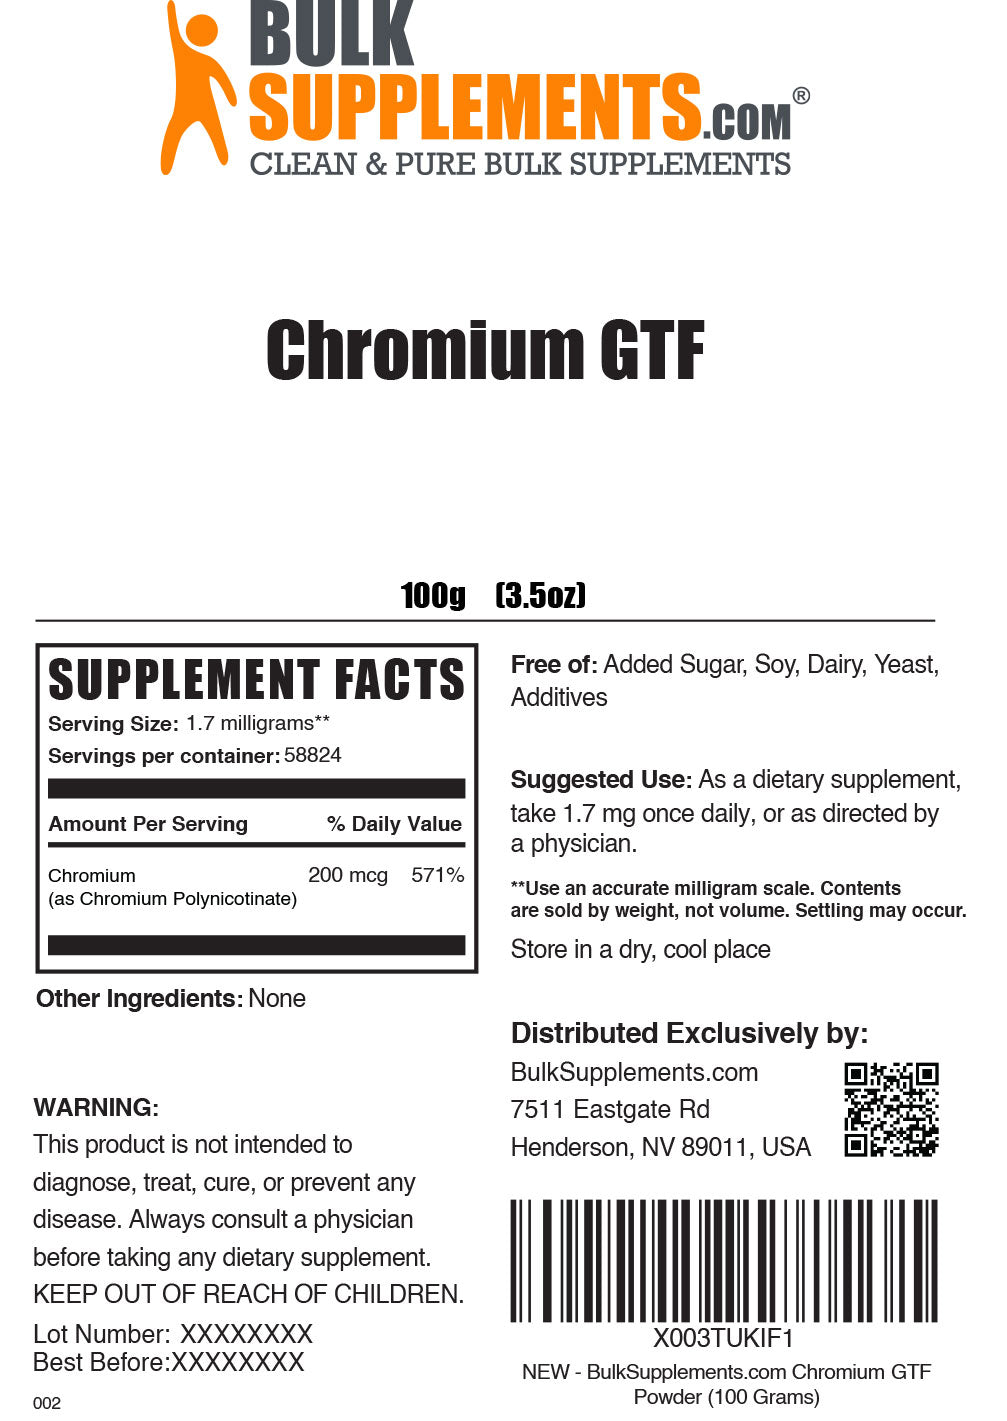 100g chromium GTF supplement facts label